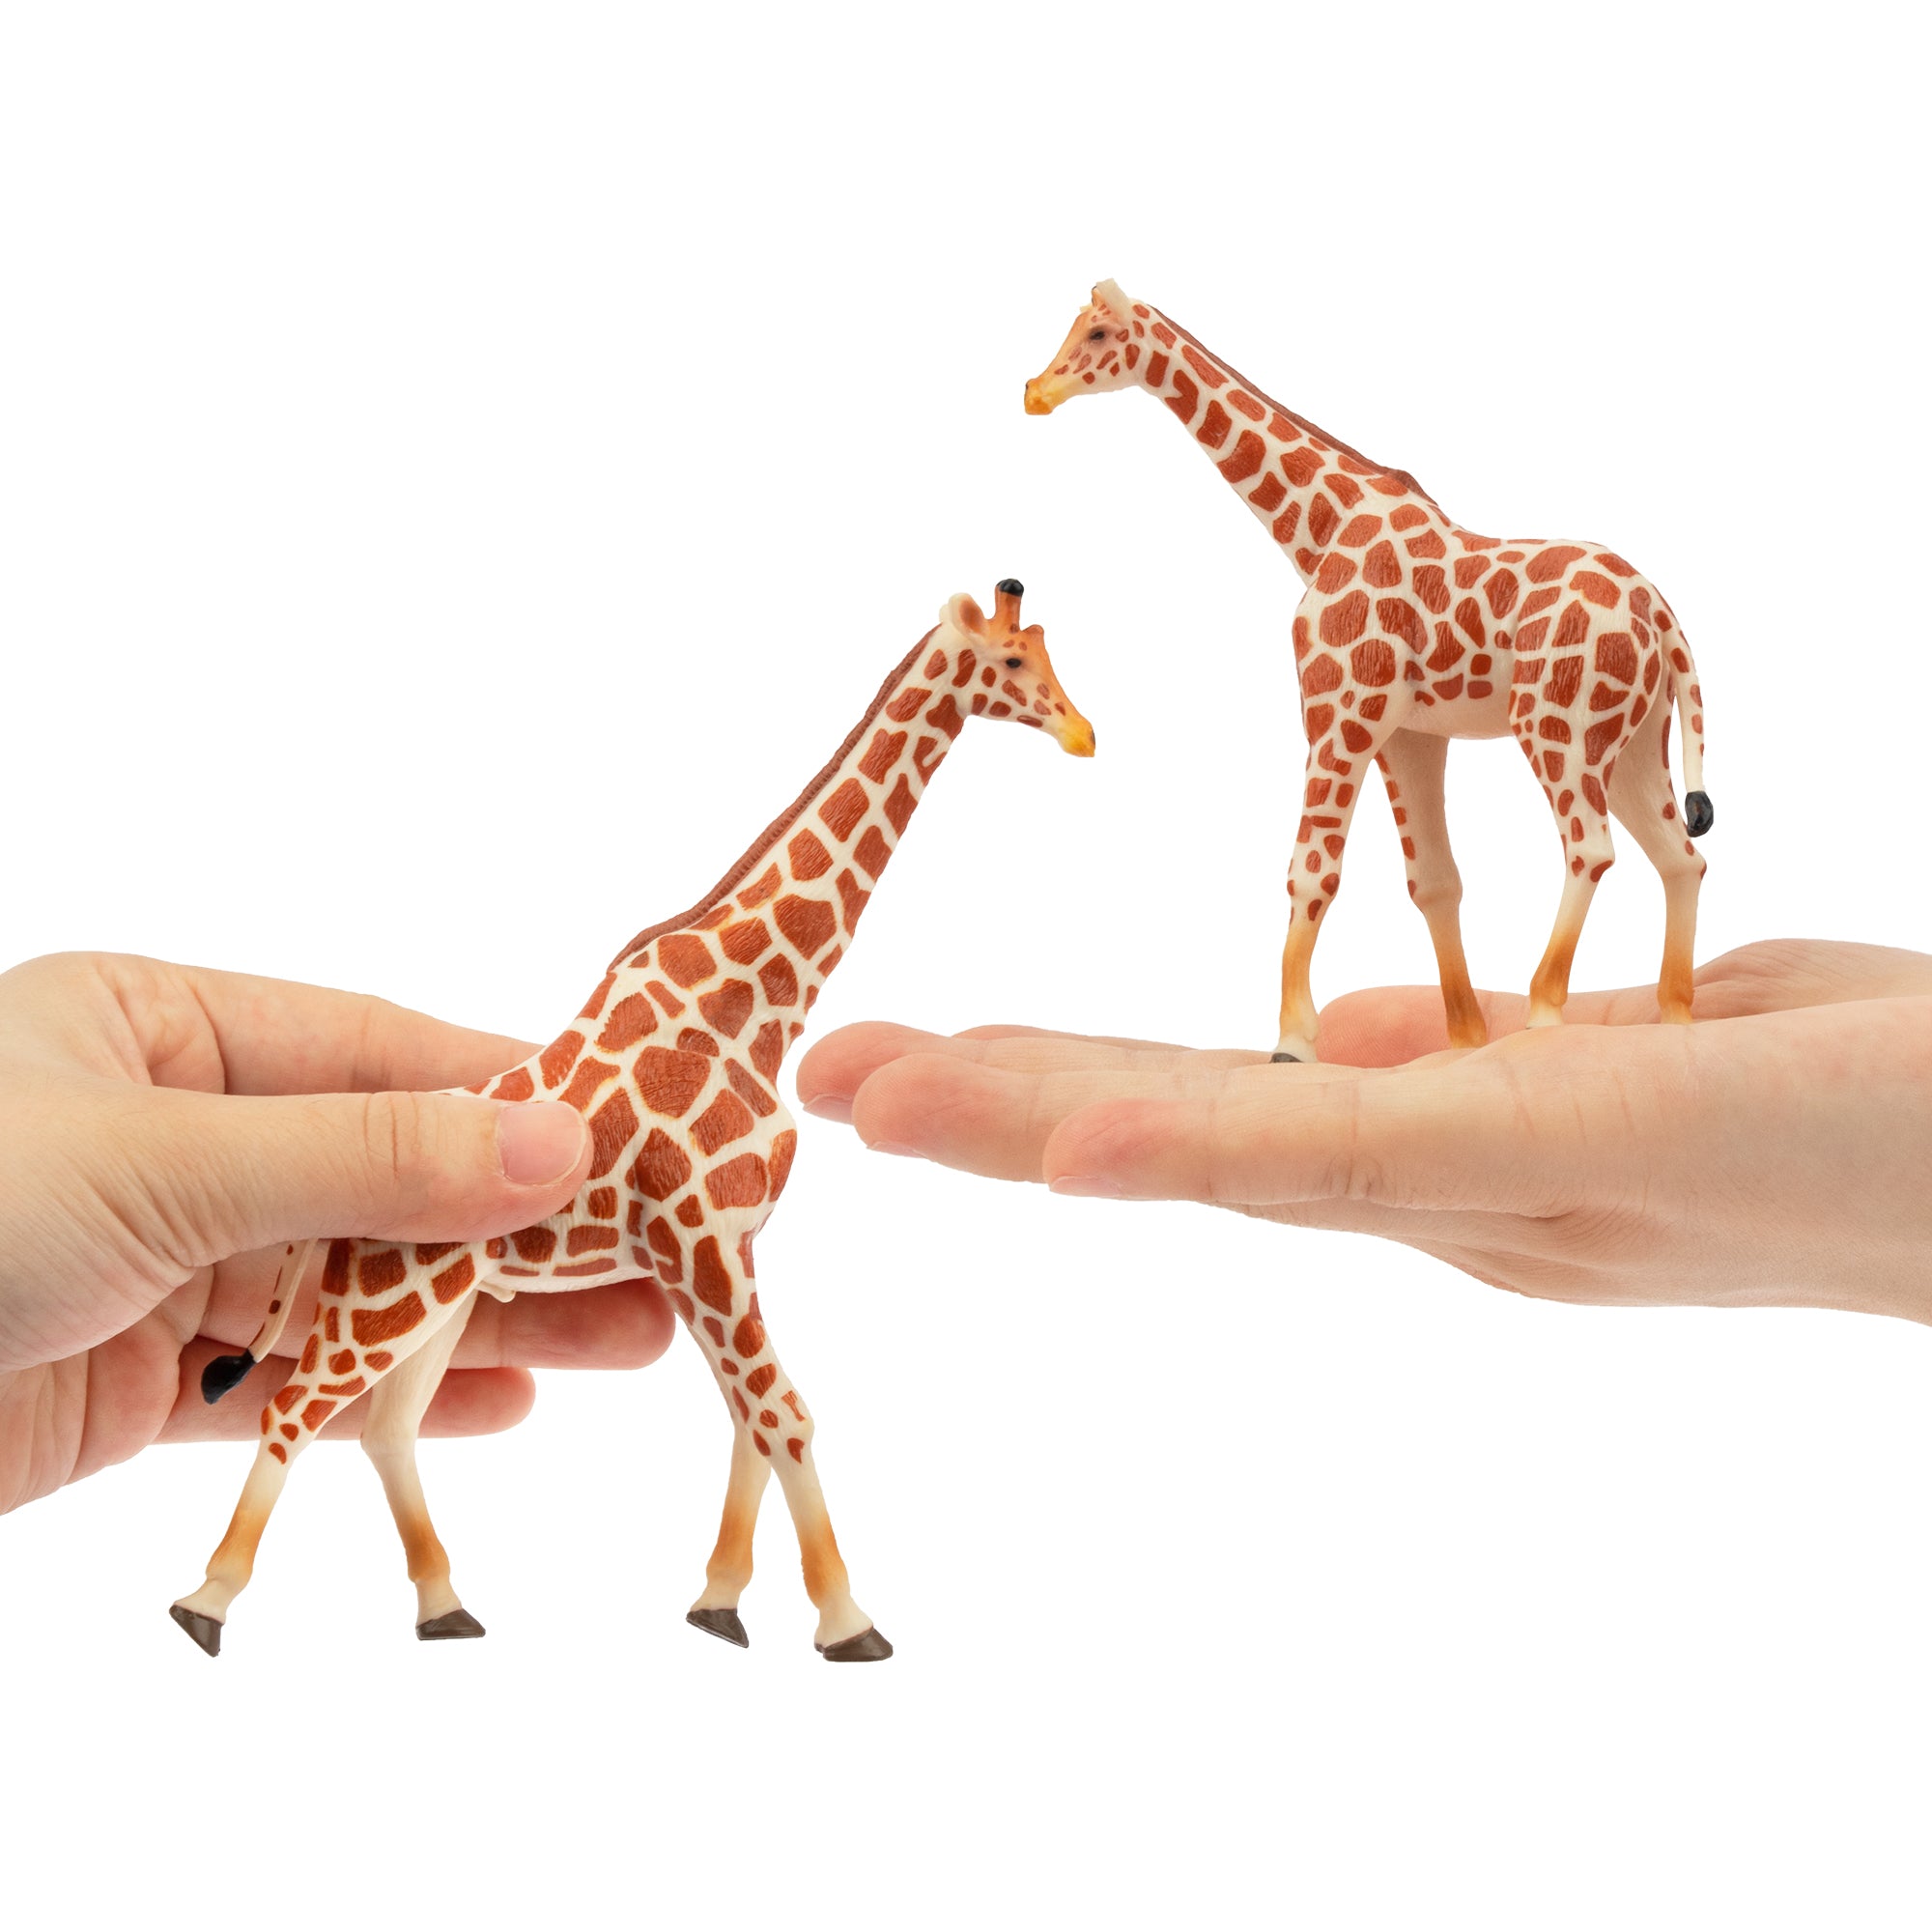 4-Piece Giraffe Family Figurines Playset with Adult & Baby Giraffes-on hand